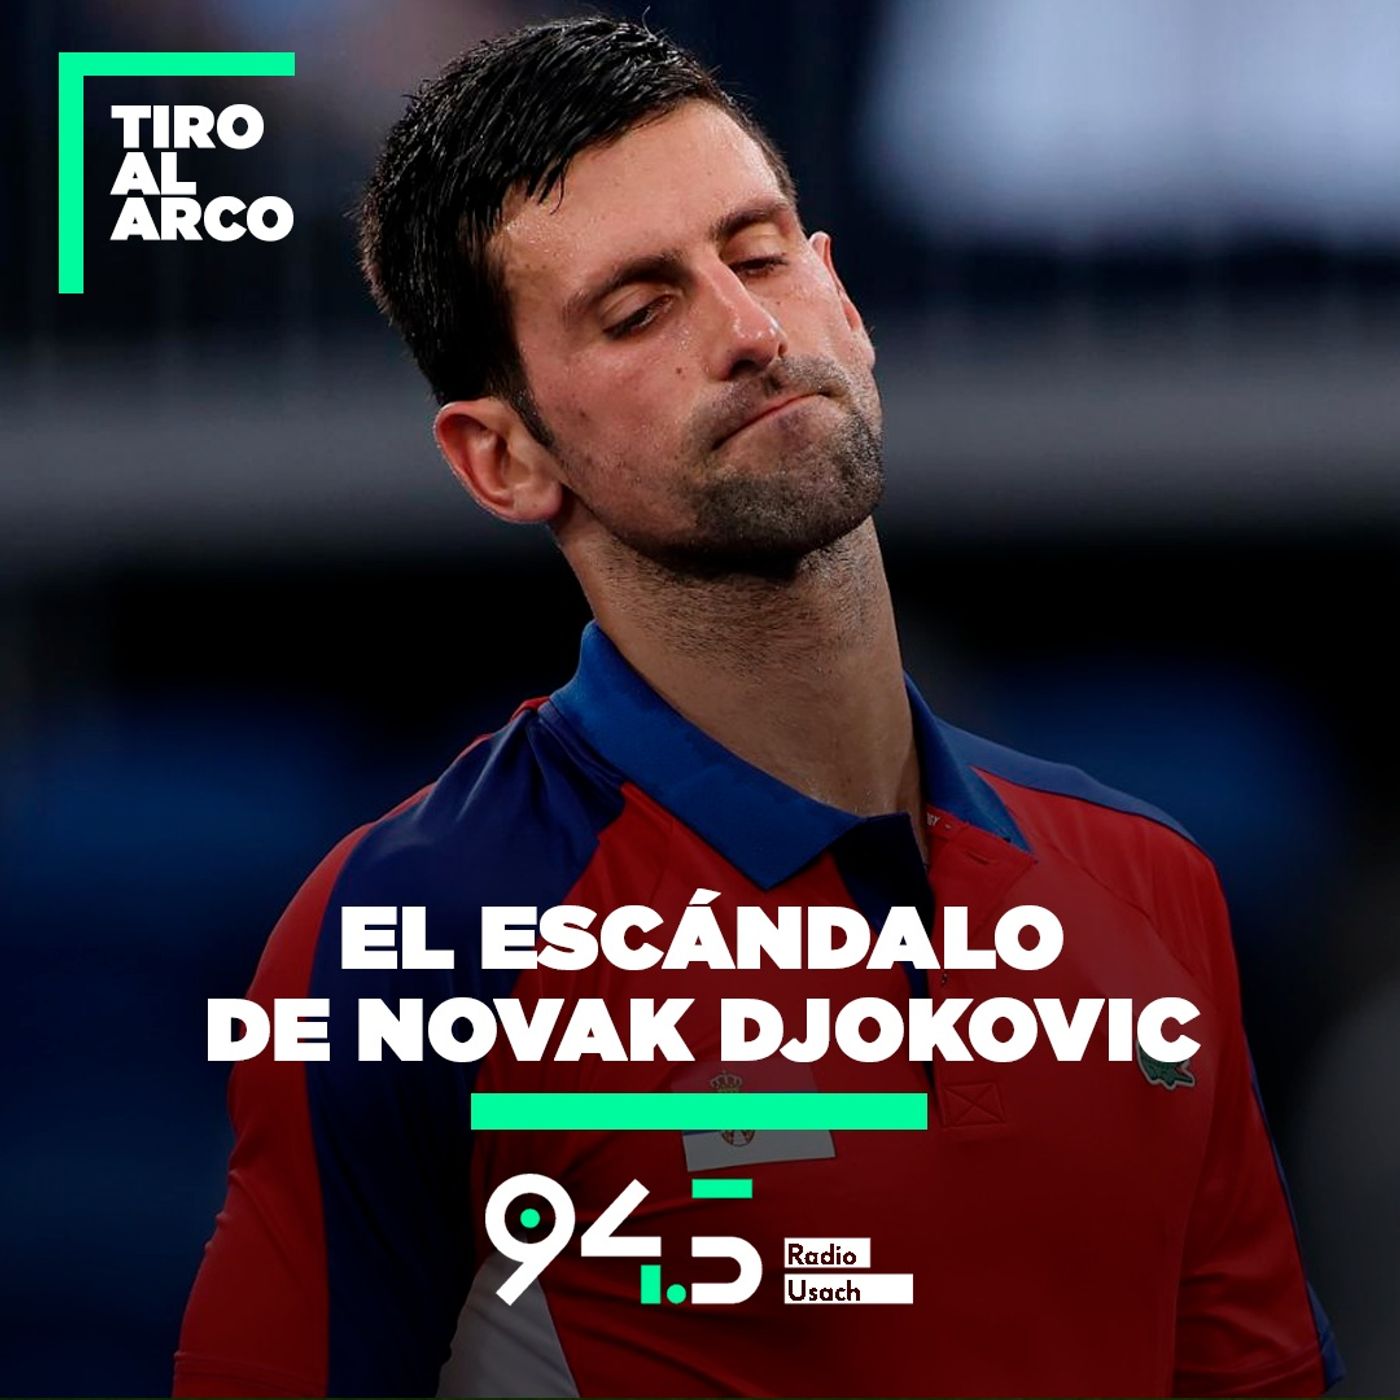 El escándalo de Novak Djokovic